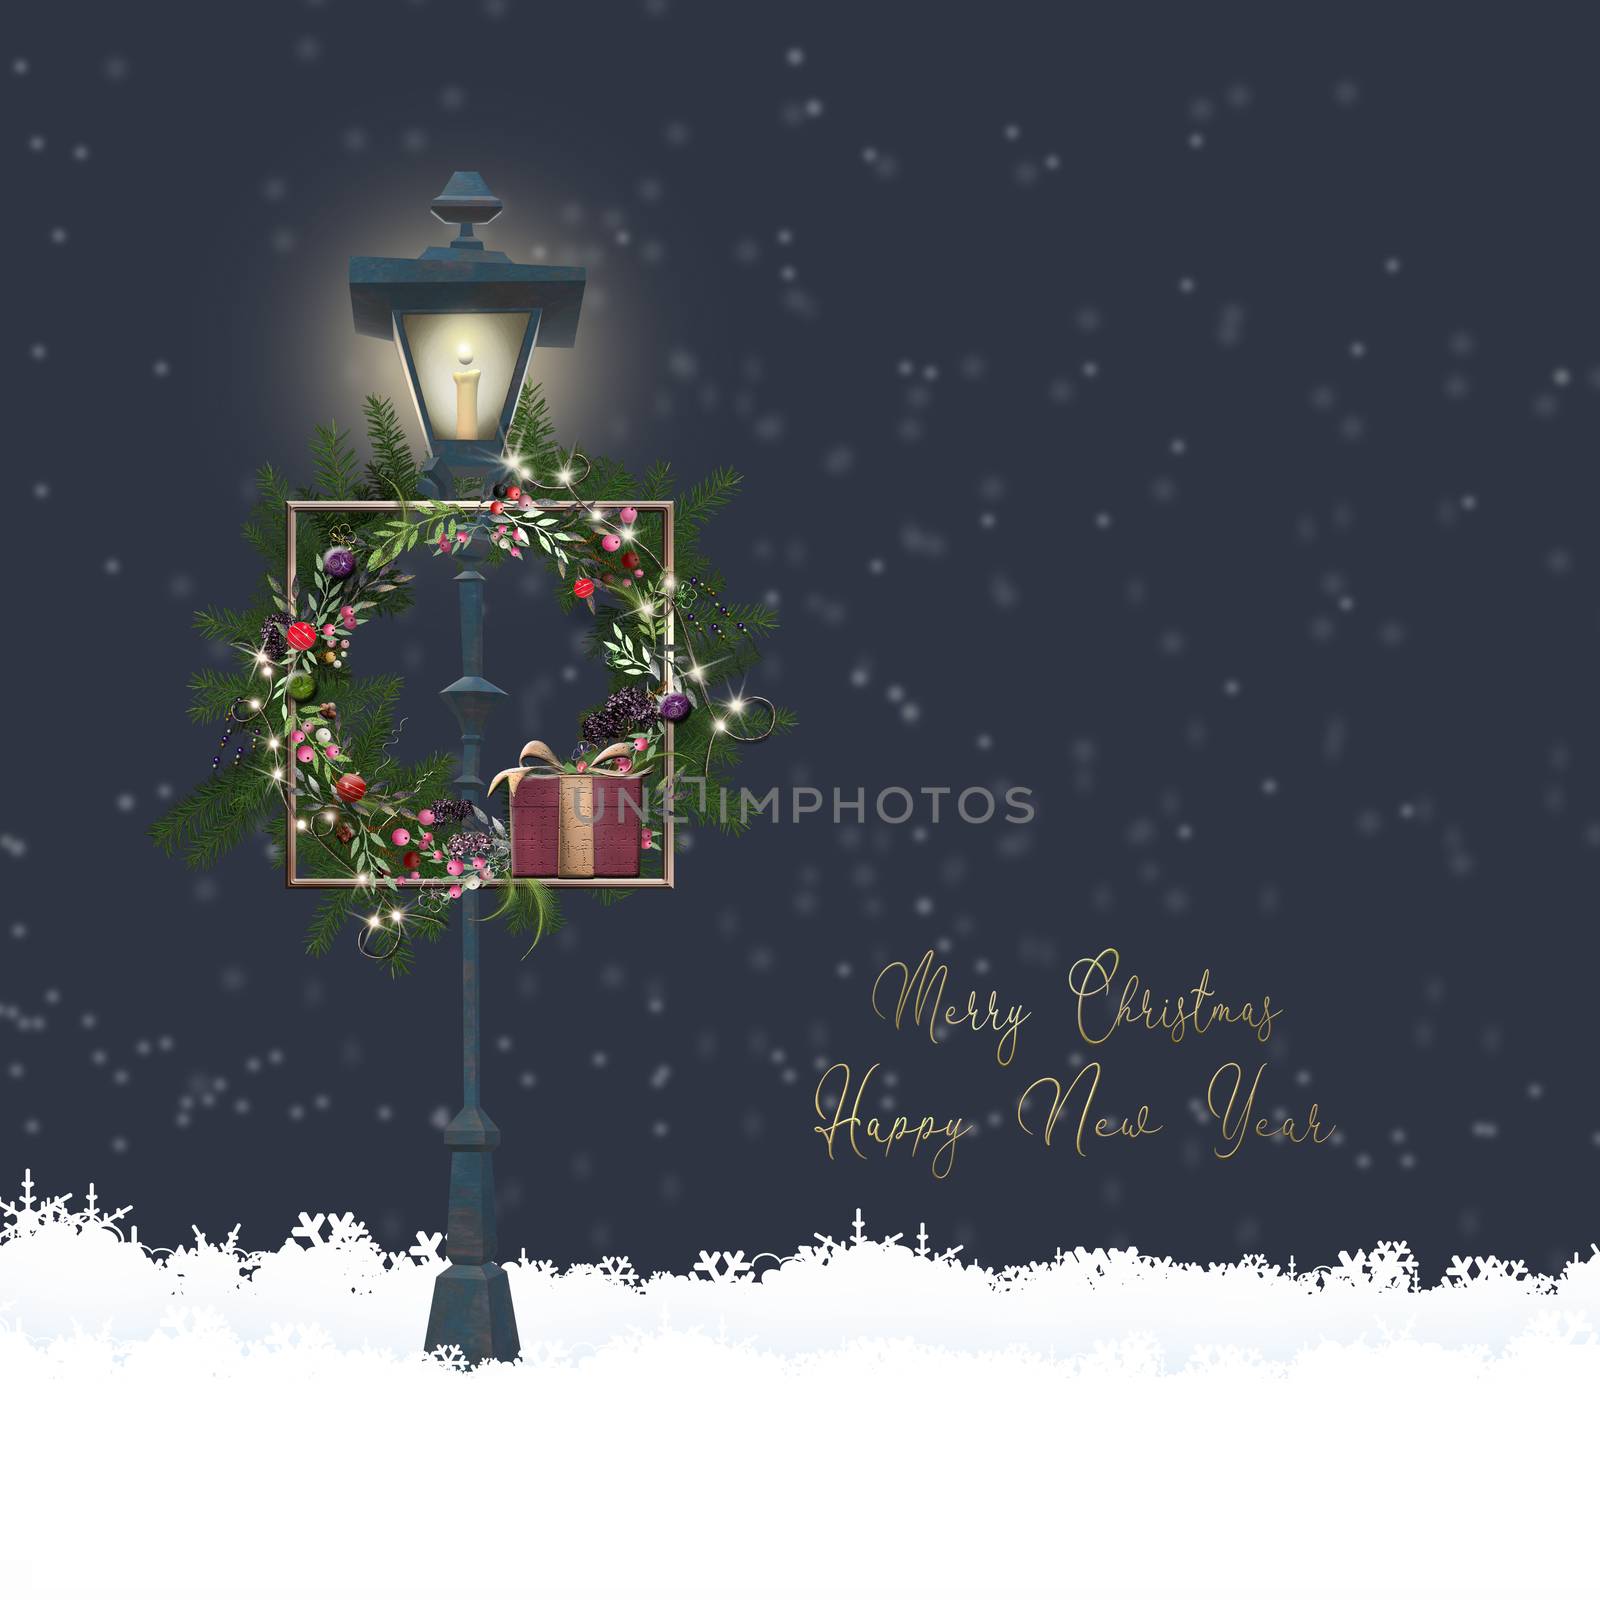 Christmas magic night design by NelliPolk